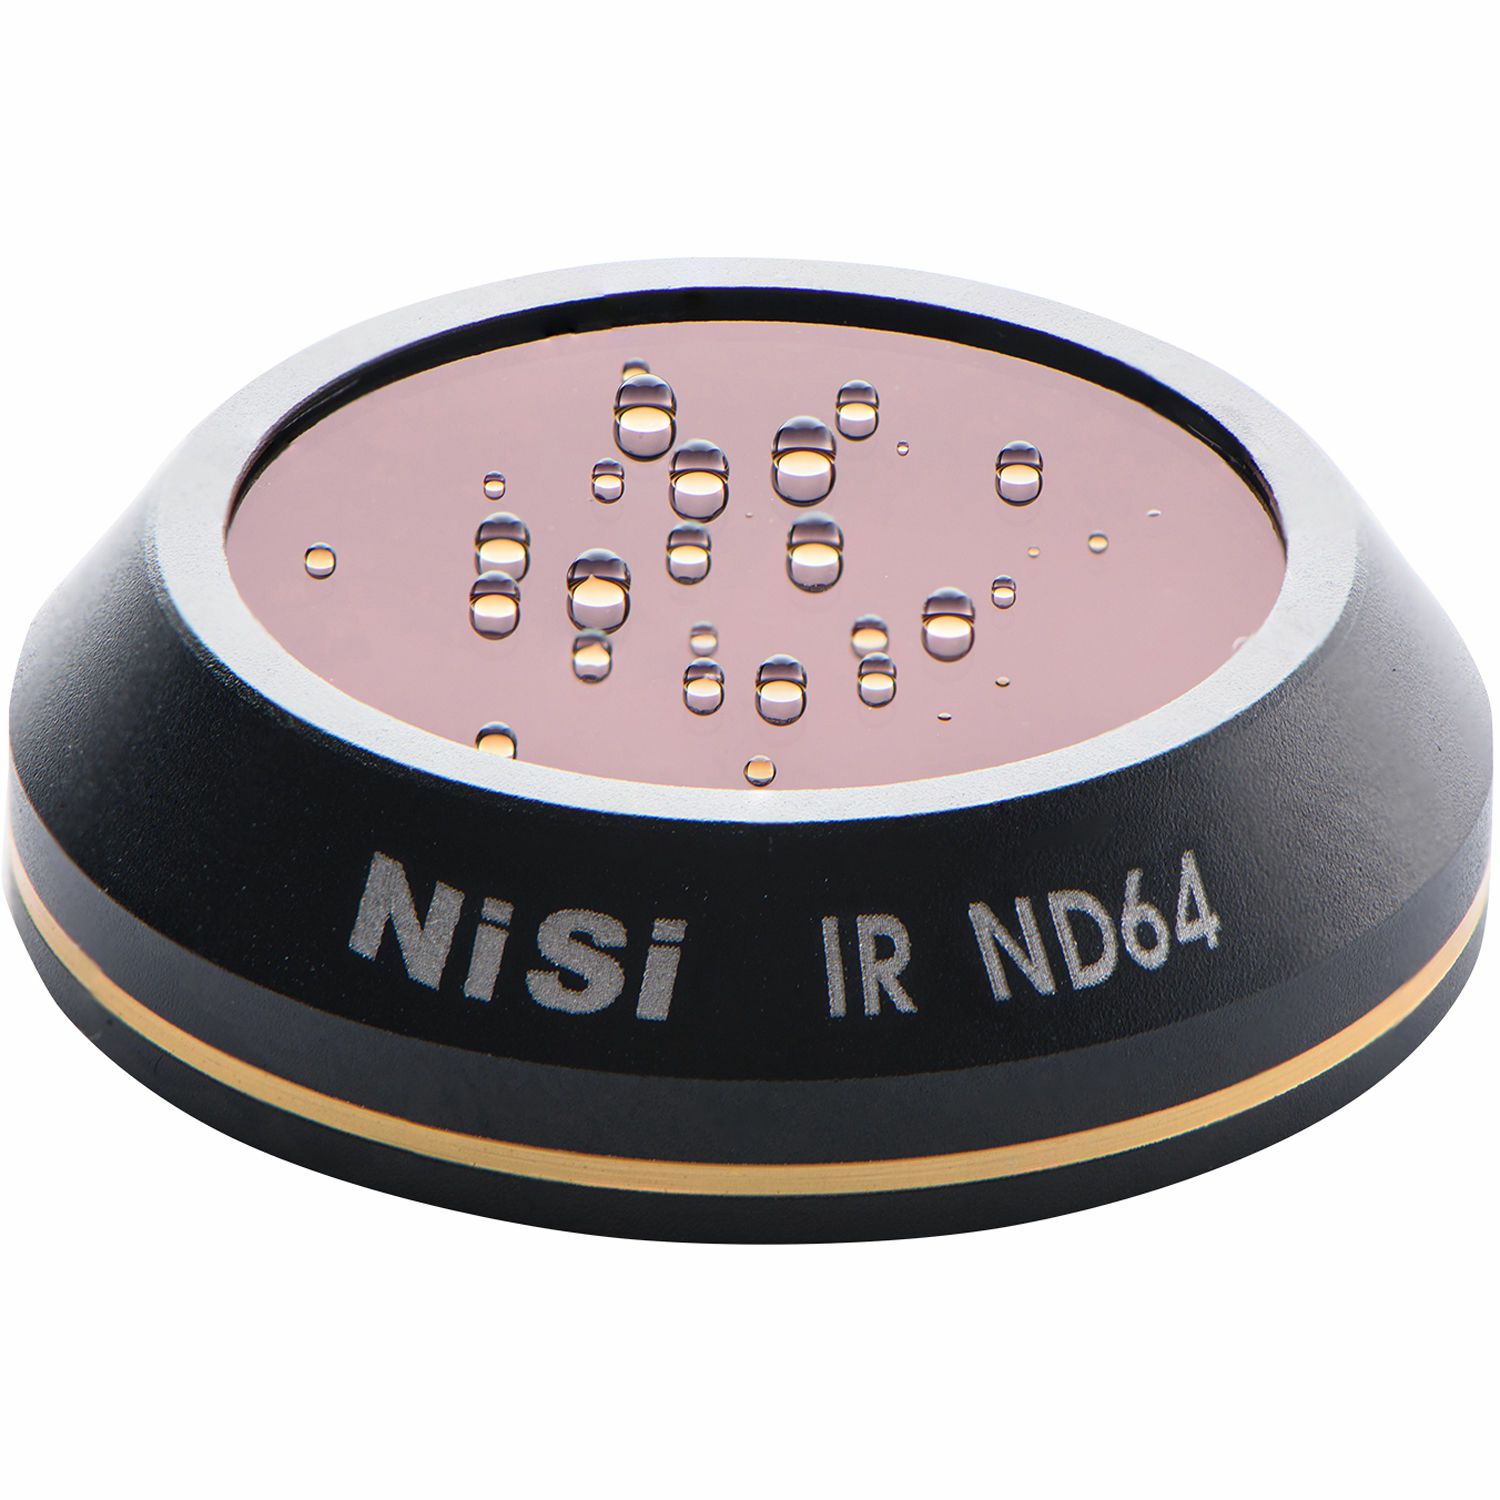 NiSi Filter KIT ND8 + ND16 + ND32 + ND64 + NC-UV + CPL for DJI Mavic Pro